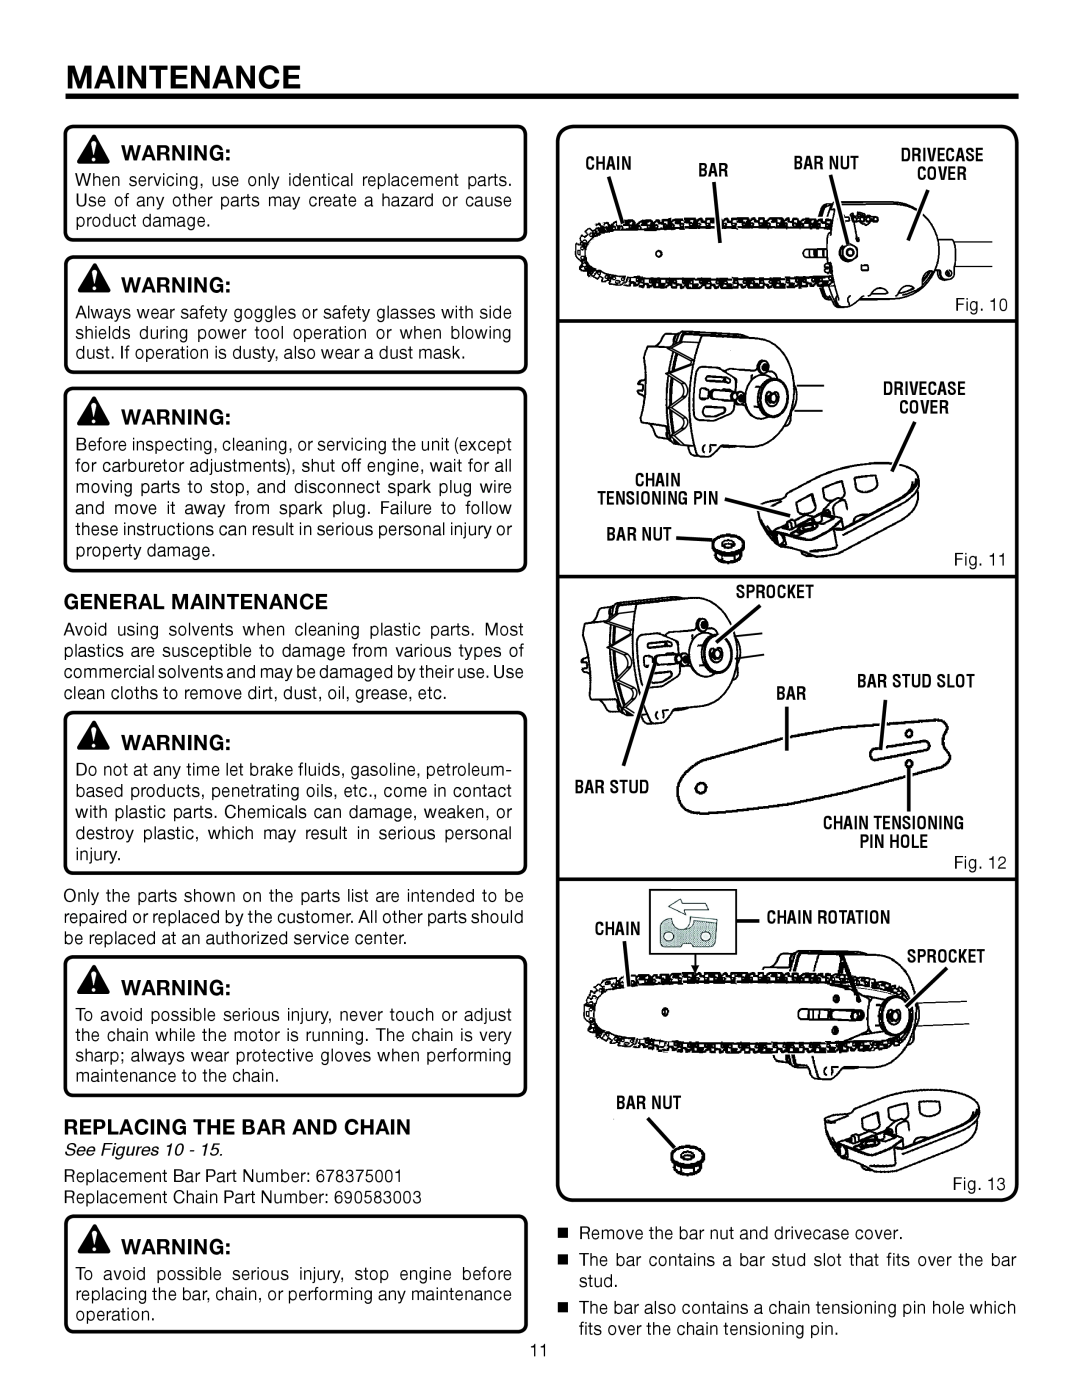 Ryobi UT15520C manual General Maintenance, Replacing The Bar And Chain, See Figures, Sprocket Bar Nut 